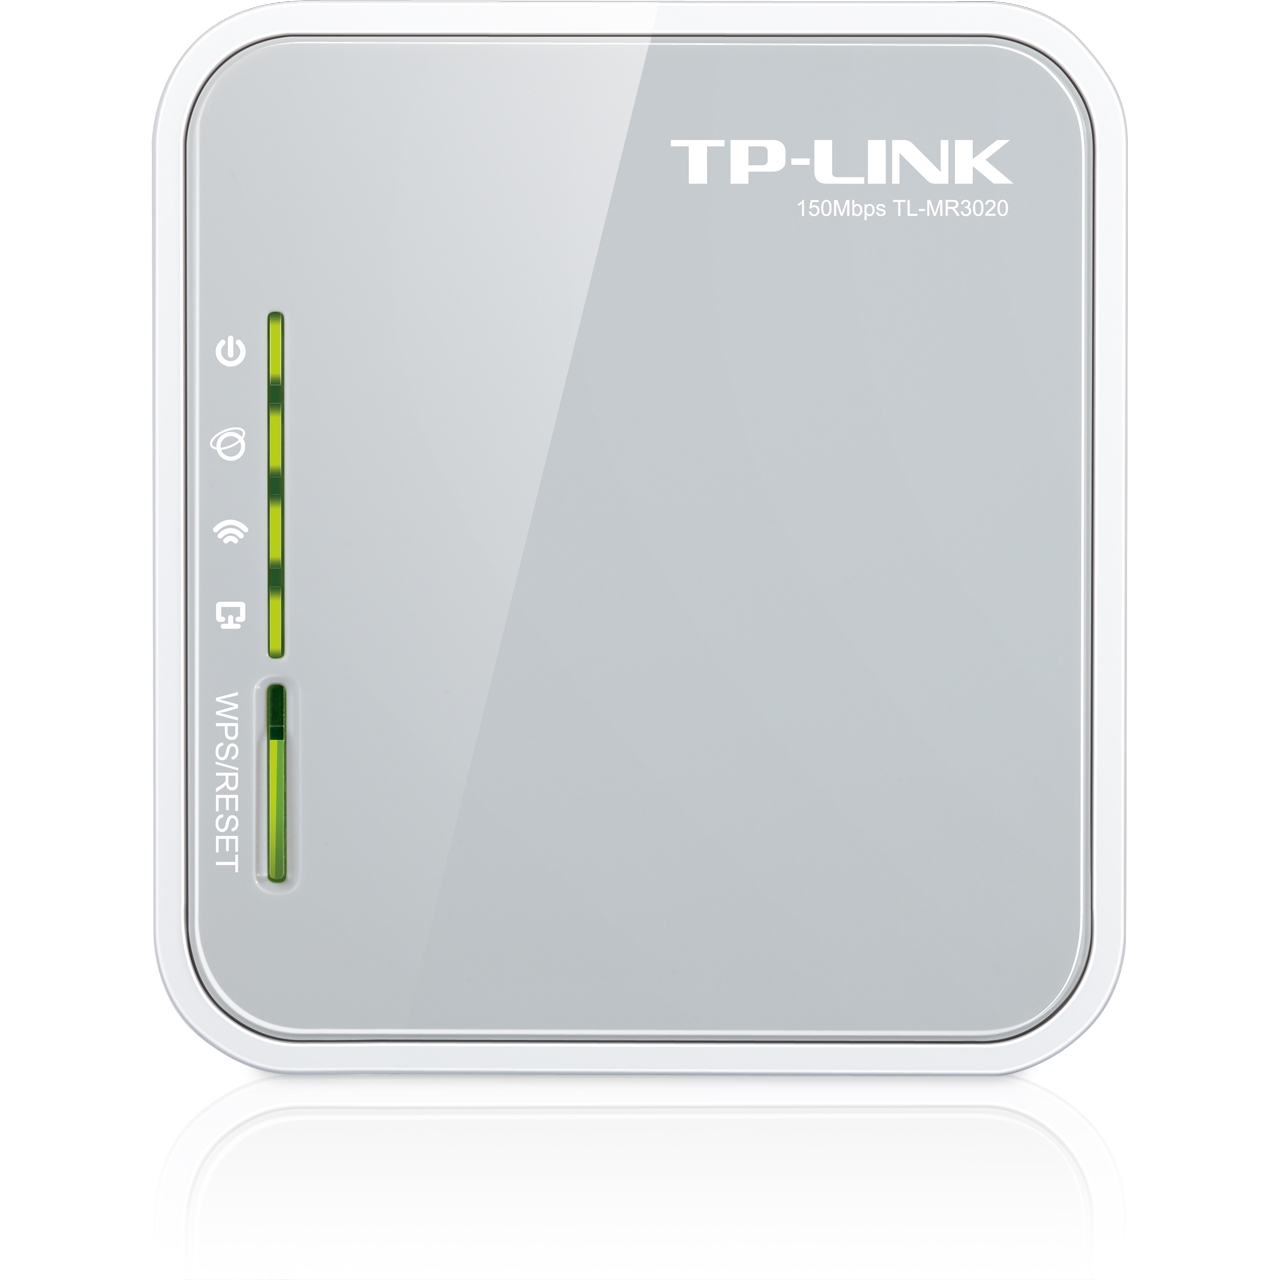 TP-LINK TL-MR3020 Routeur WiFi N 150Mbps compatible 3G/3G+/4G